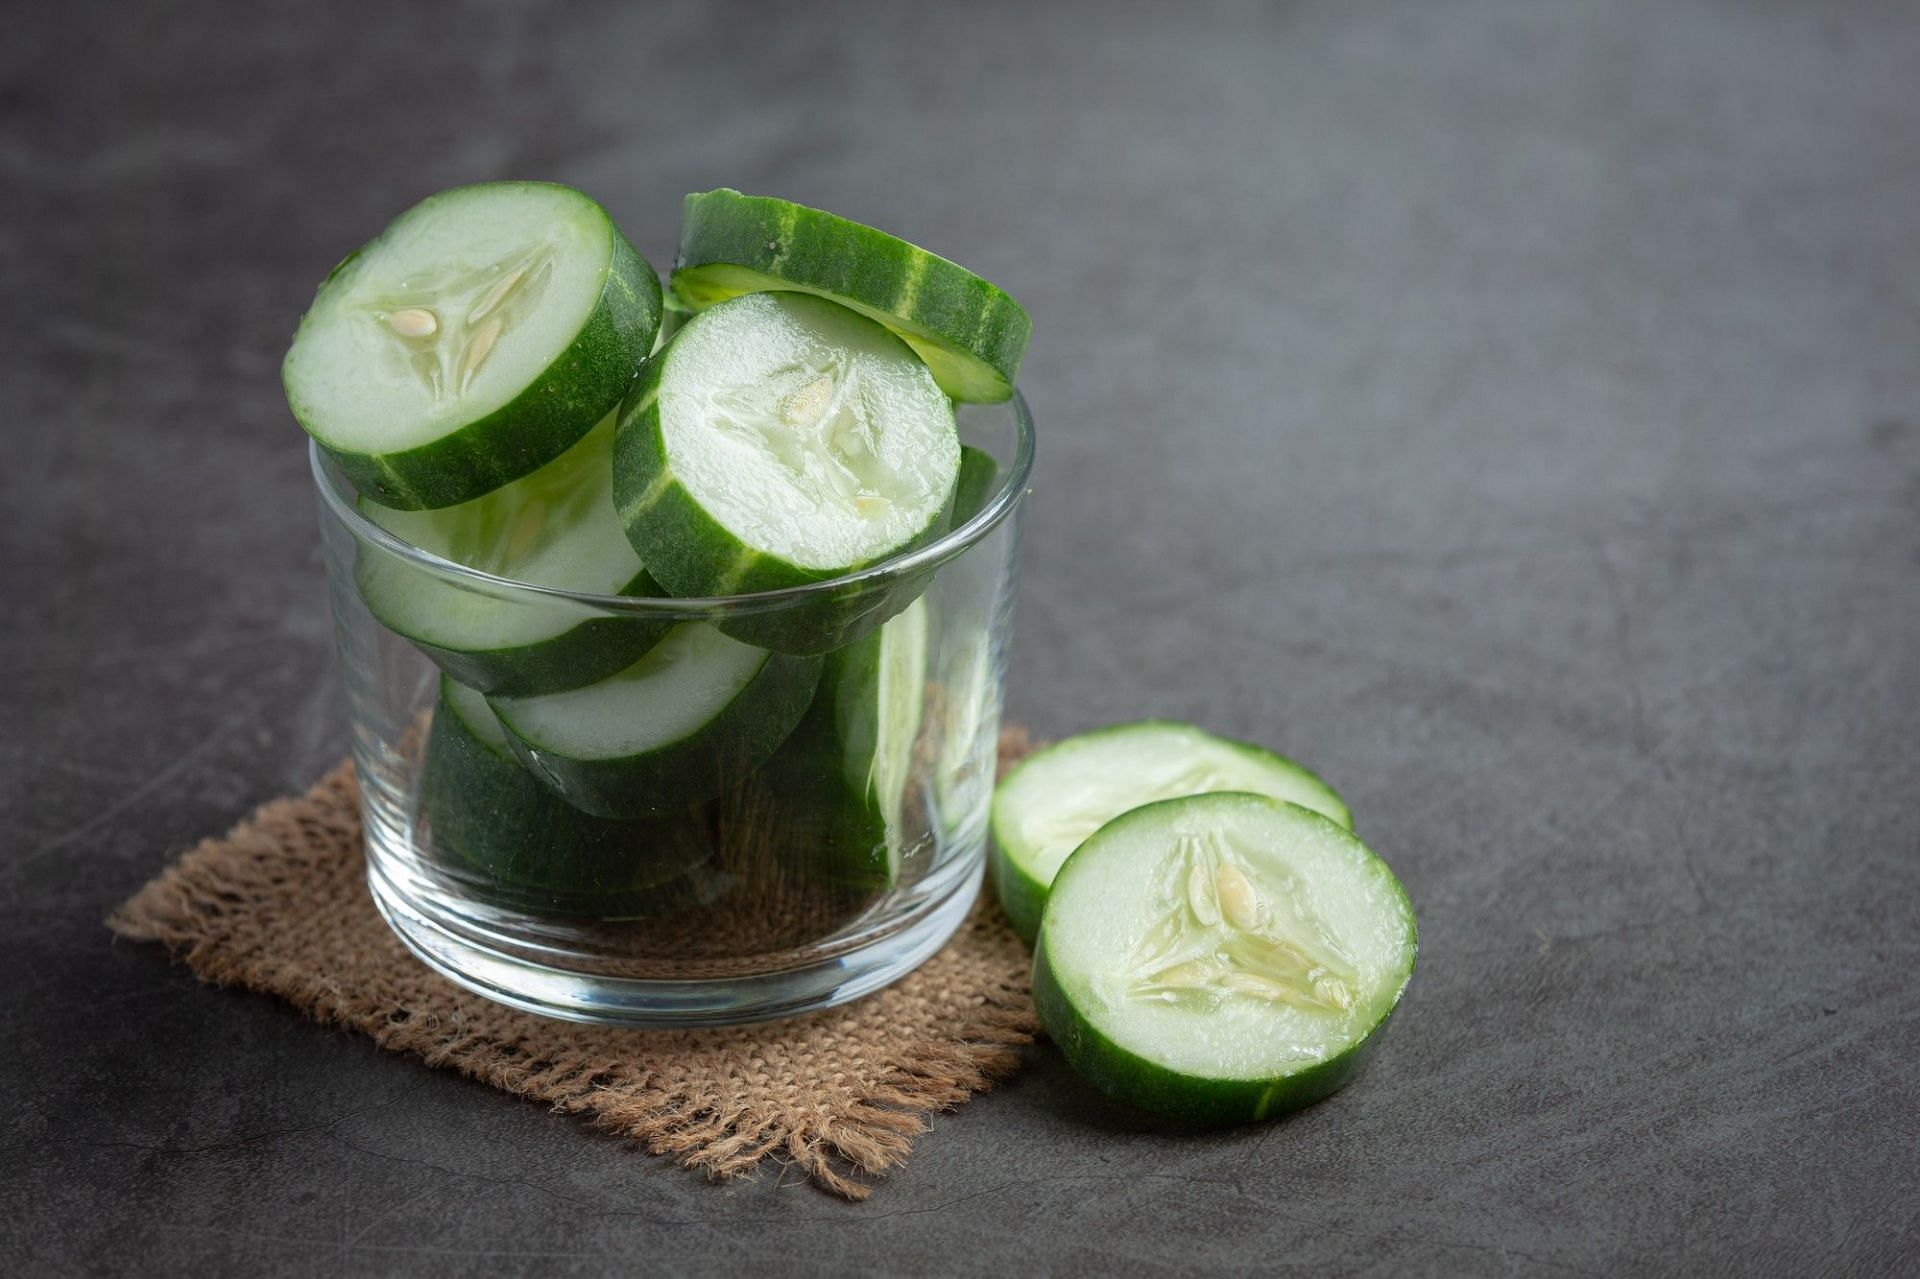 Cucumber water can be made at home. (Photo via Freepik/jcomp)